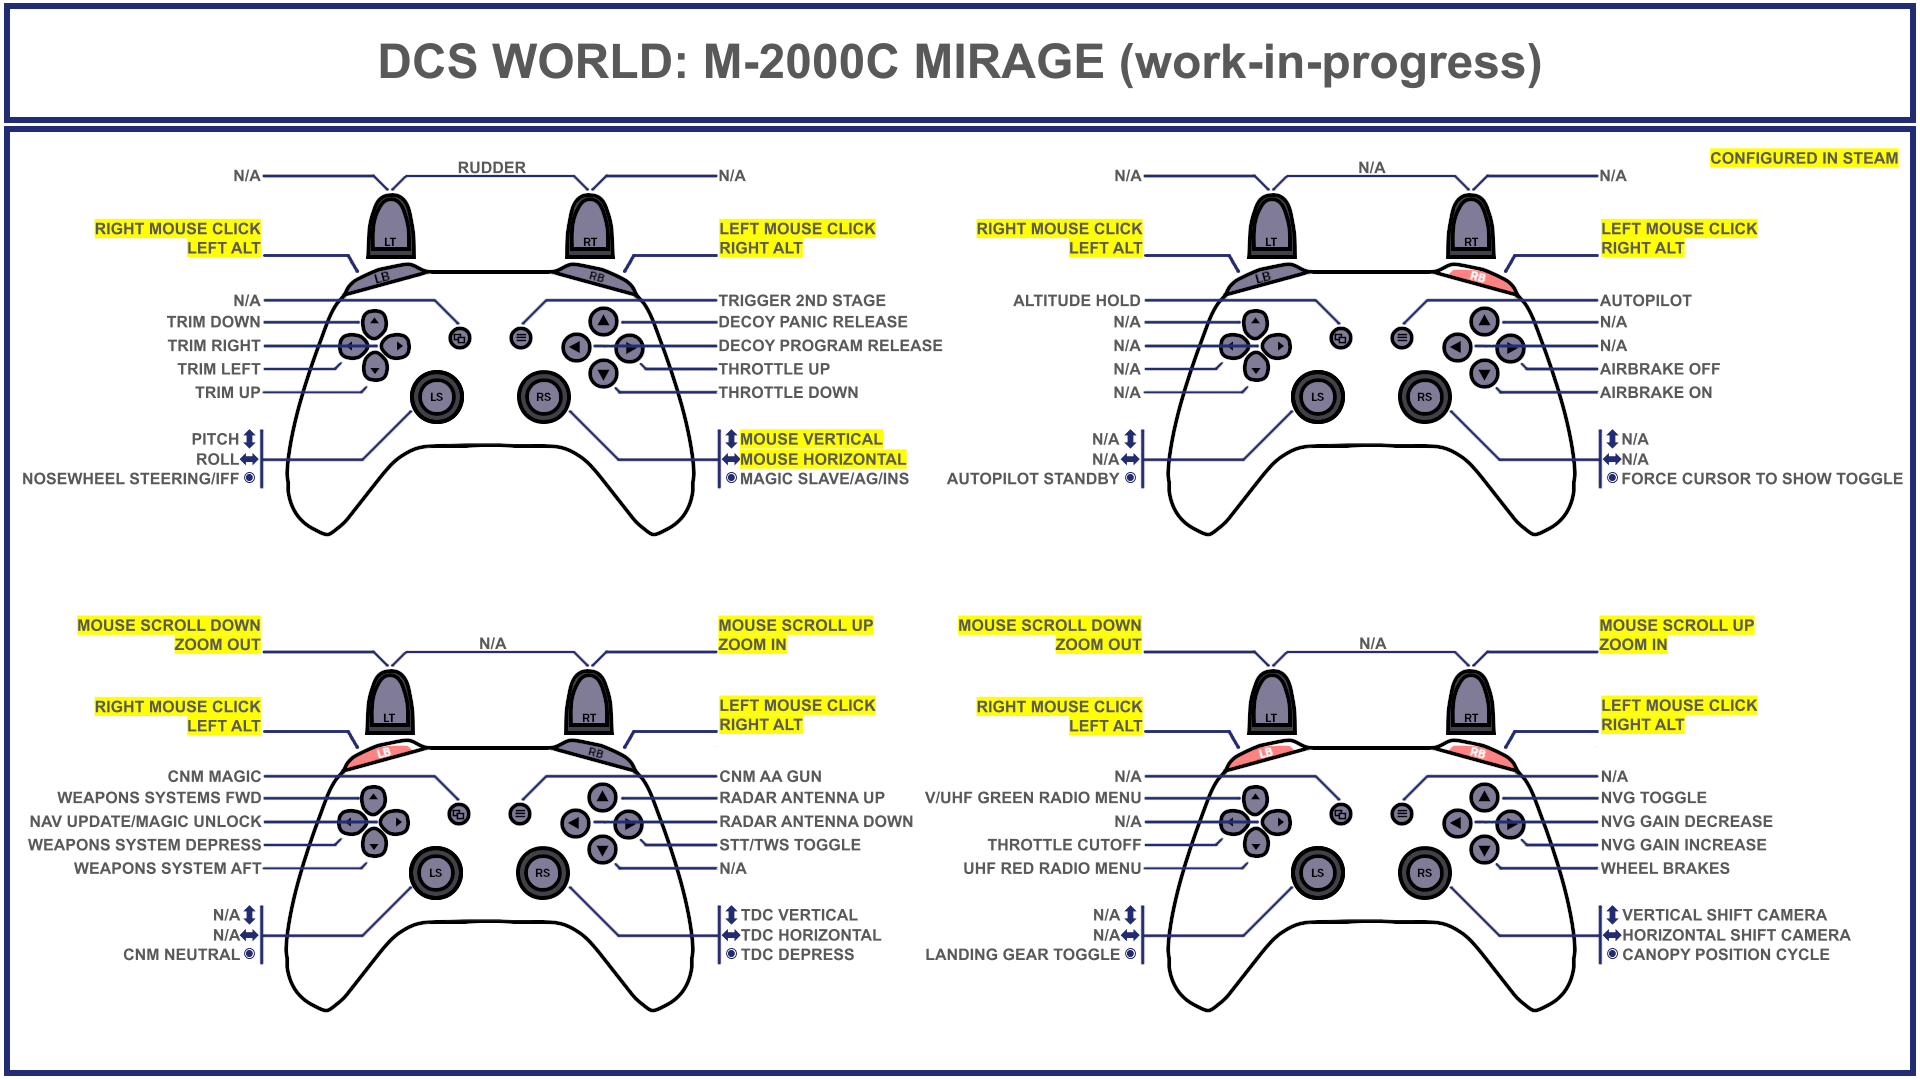 Tuuvas' Official M-2000C (work-in-progress) Gamepad Controller Layout